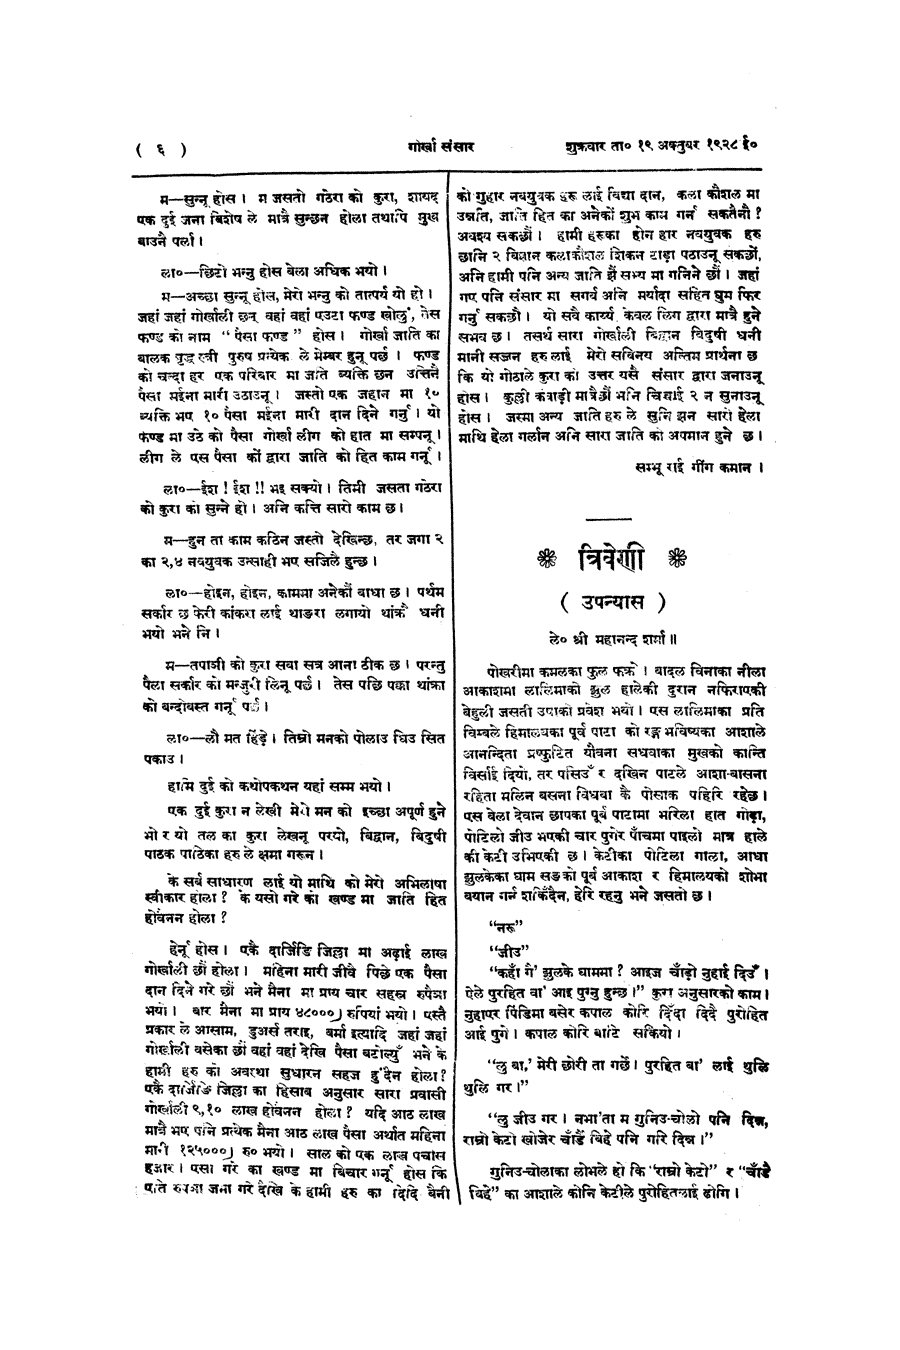 Gorkha Sansar, 19 Oct 1928, page 6